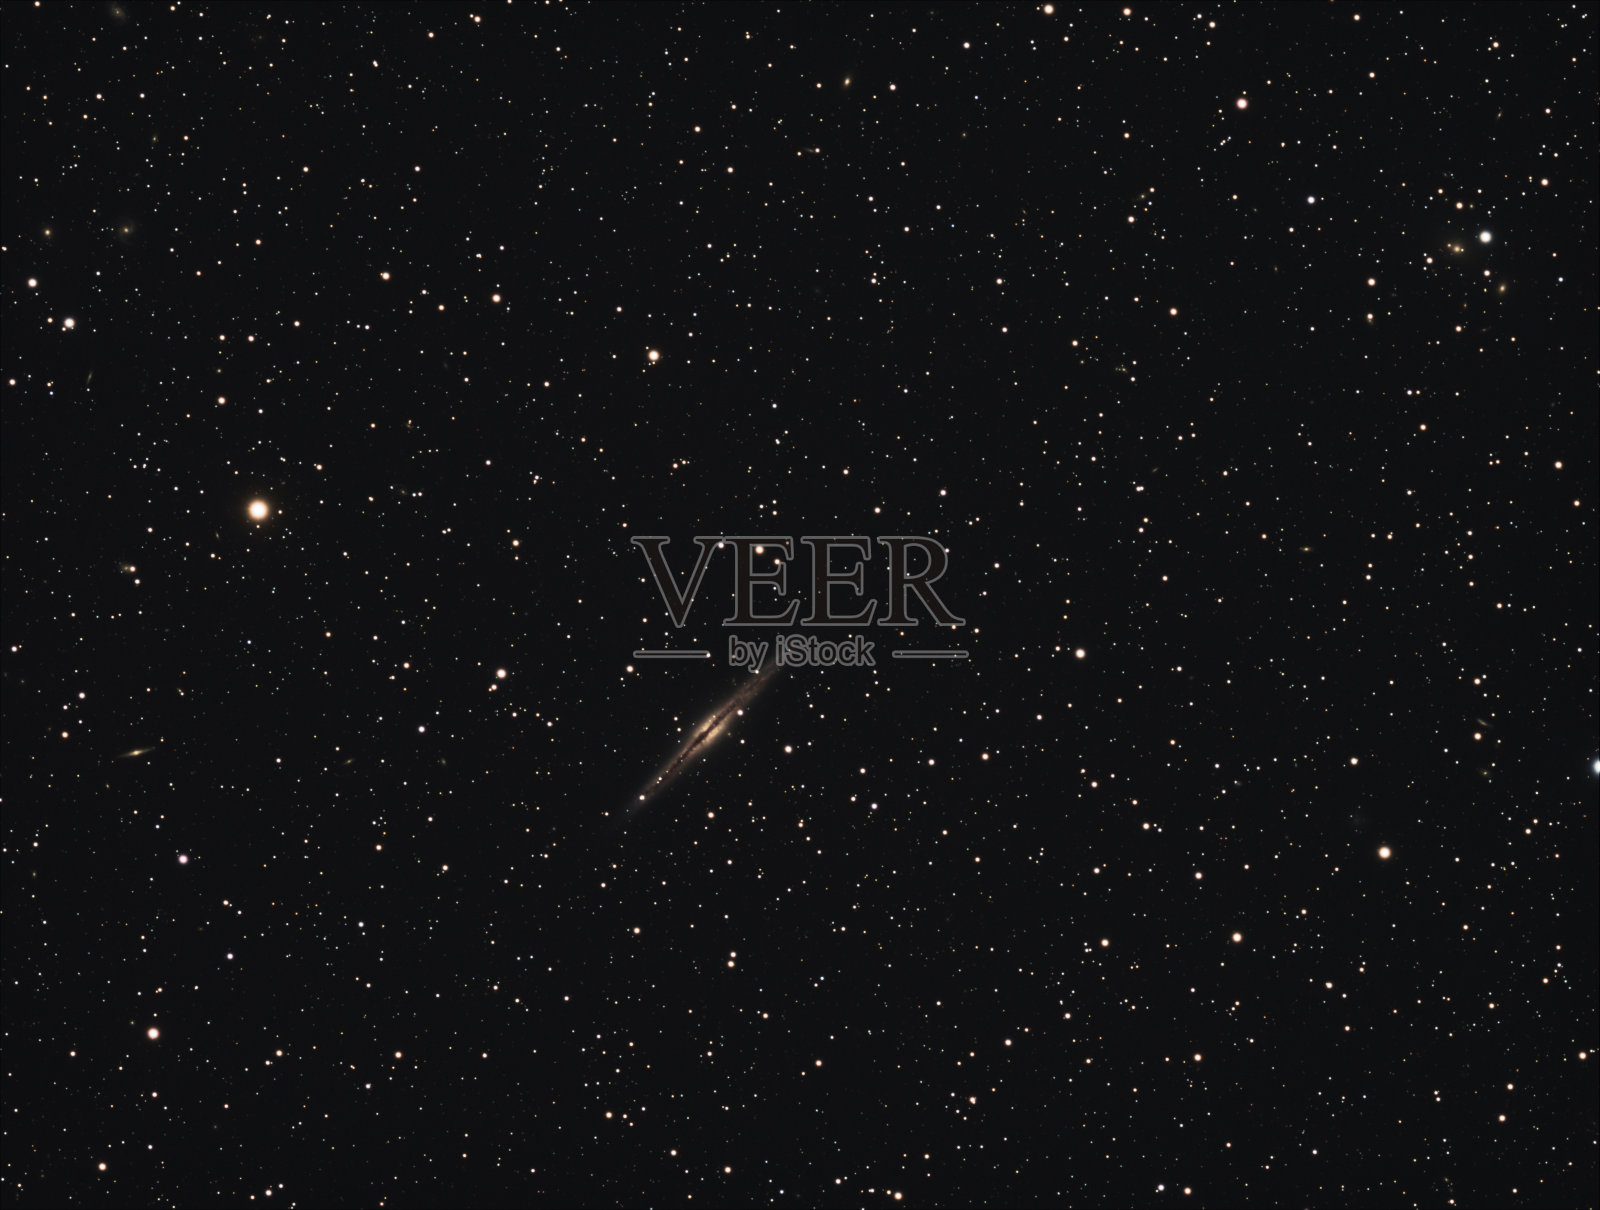 ngc891是仙女座的一个美丽的侧面星系照片摄影图片